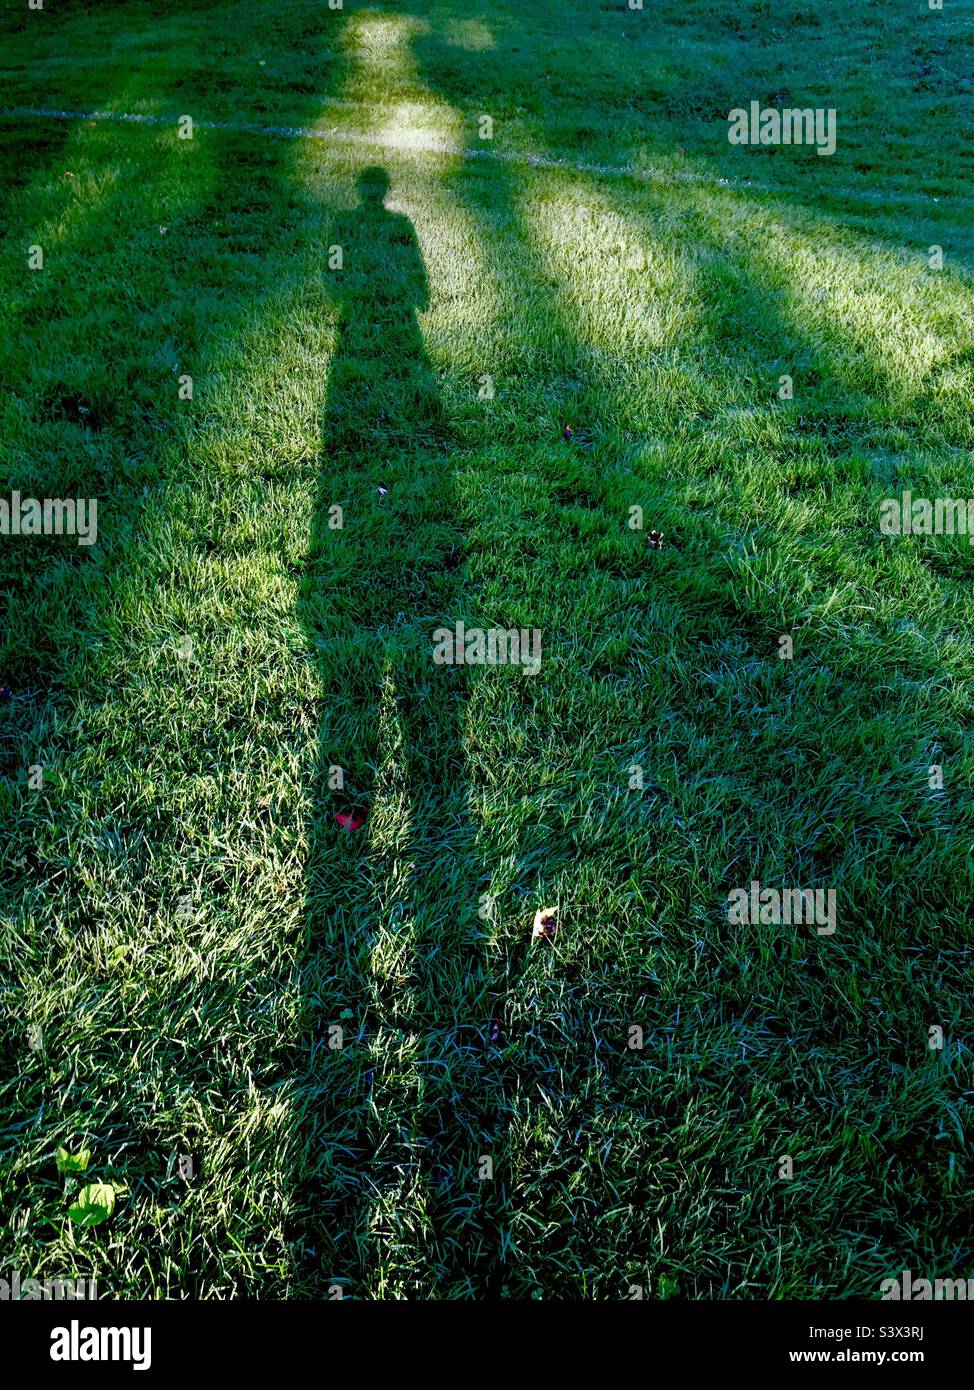 Phantom. Man’s long shadow in shafts of light on grass. Stock Photo